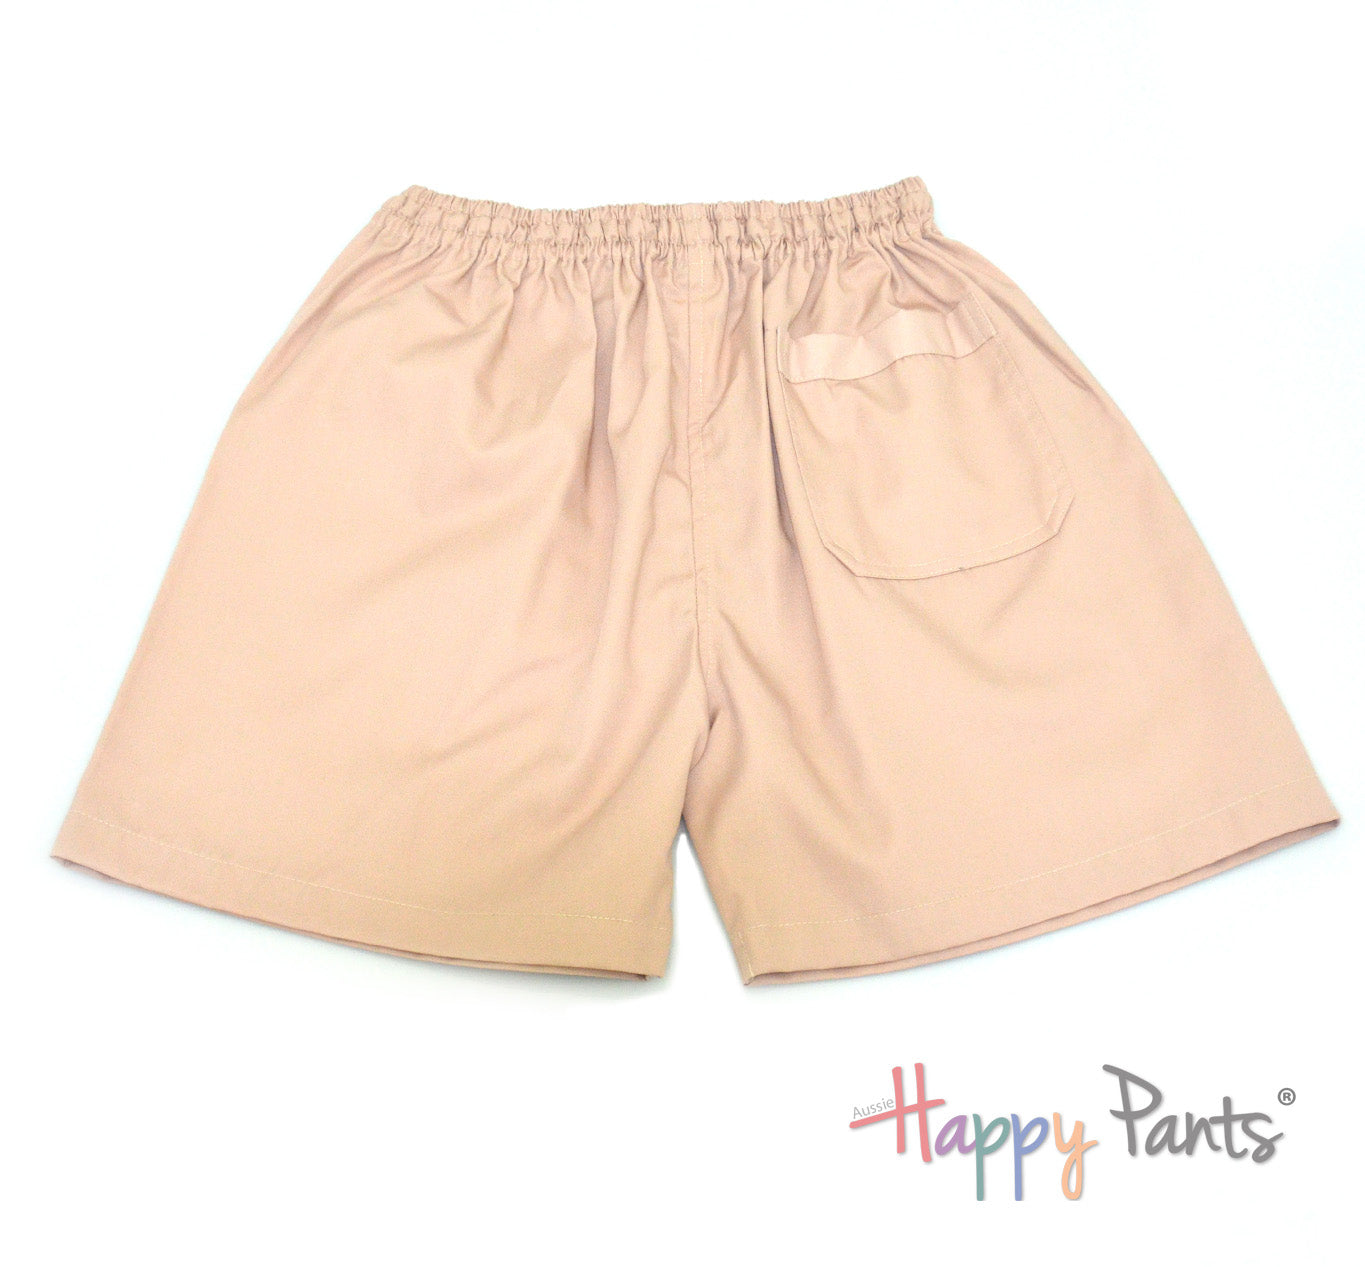 Tan shorts with elastic waist holiday pants resort wear Australia comfy bermudas 